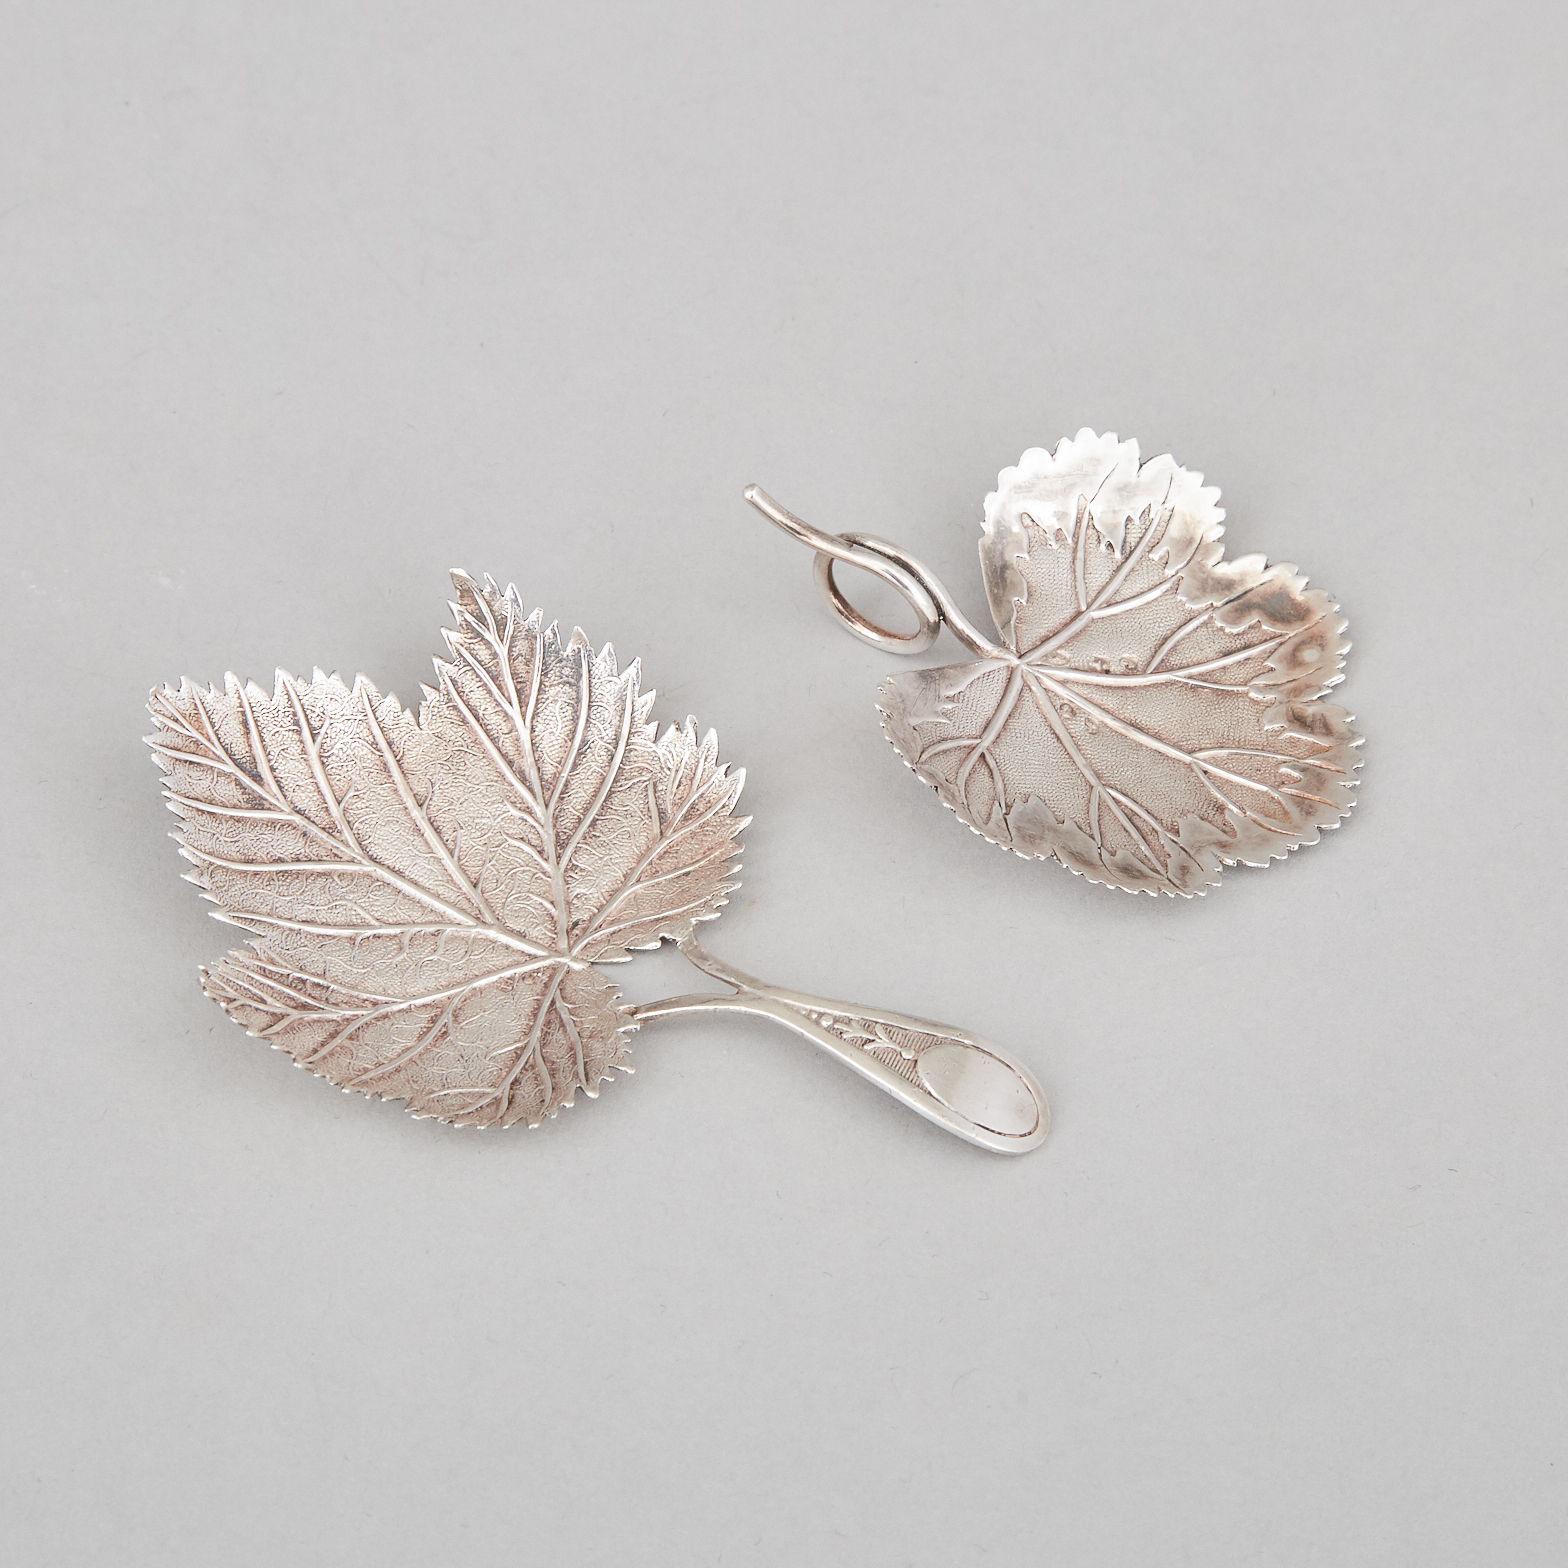 Two George III Silver Leaf Shaped Caddy Spoons, Matthew Linwood, Birmingham, 1807/08